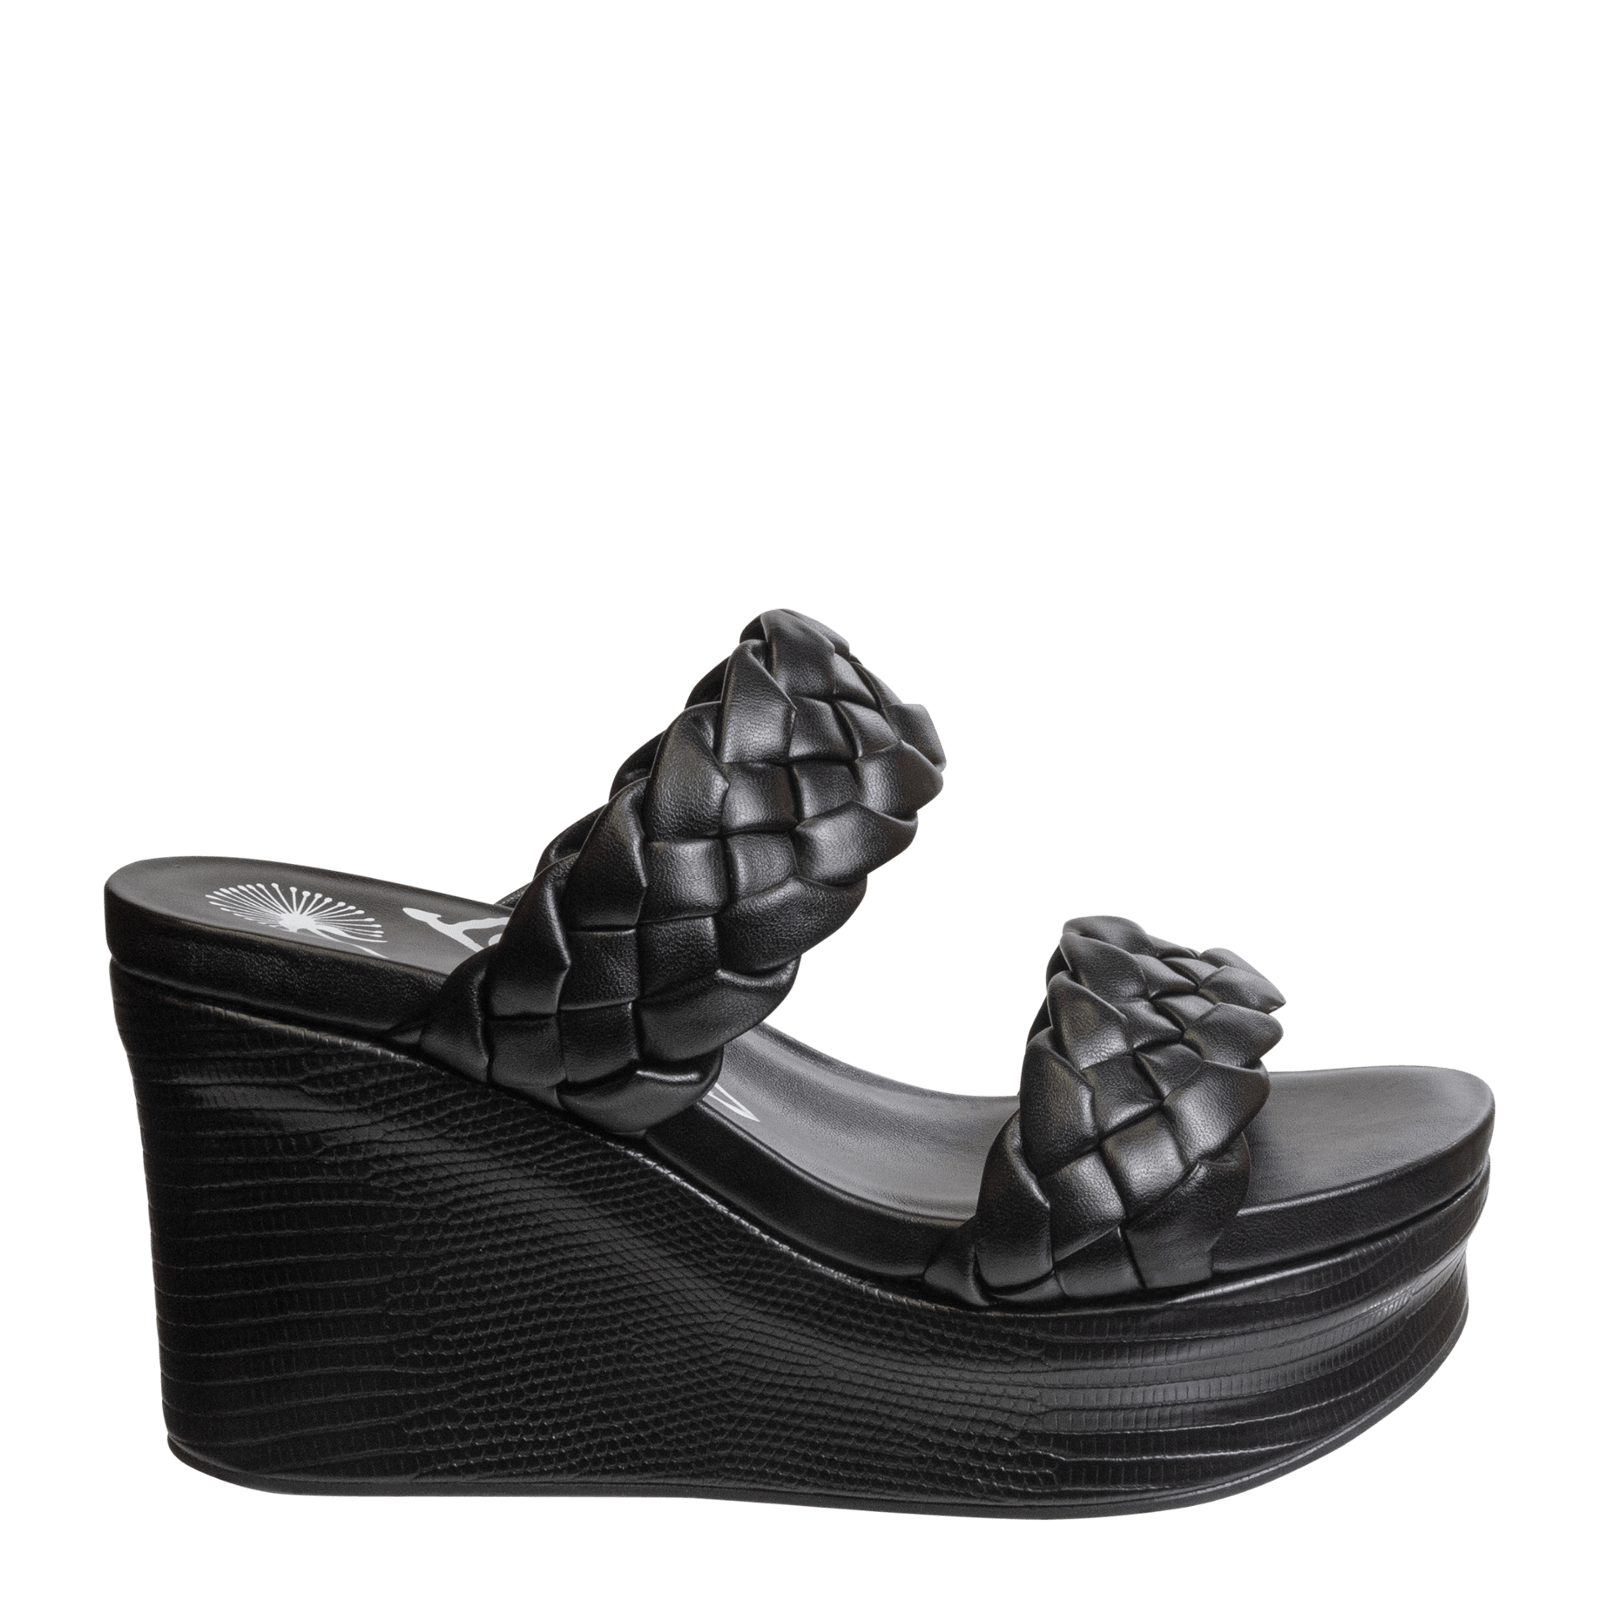 Venezia Black Suede Leather Wedge Heel Pump